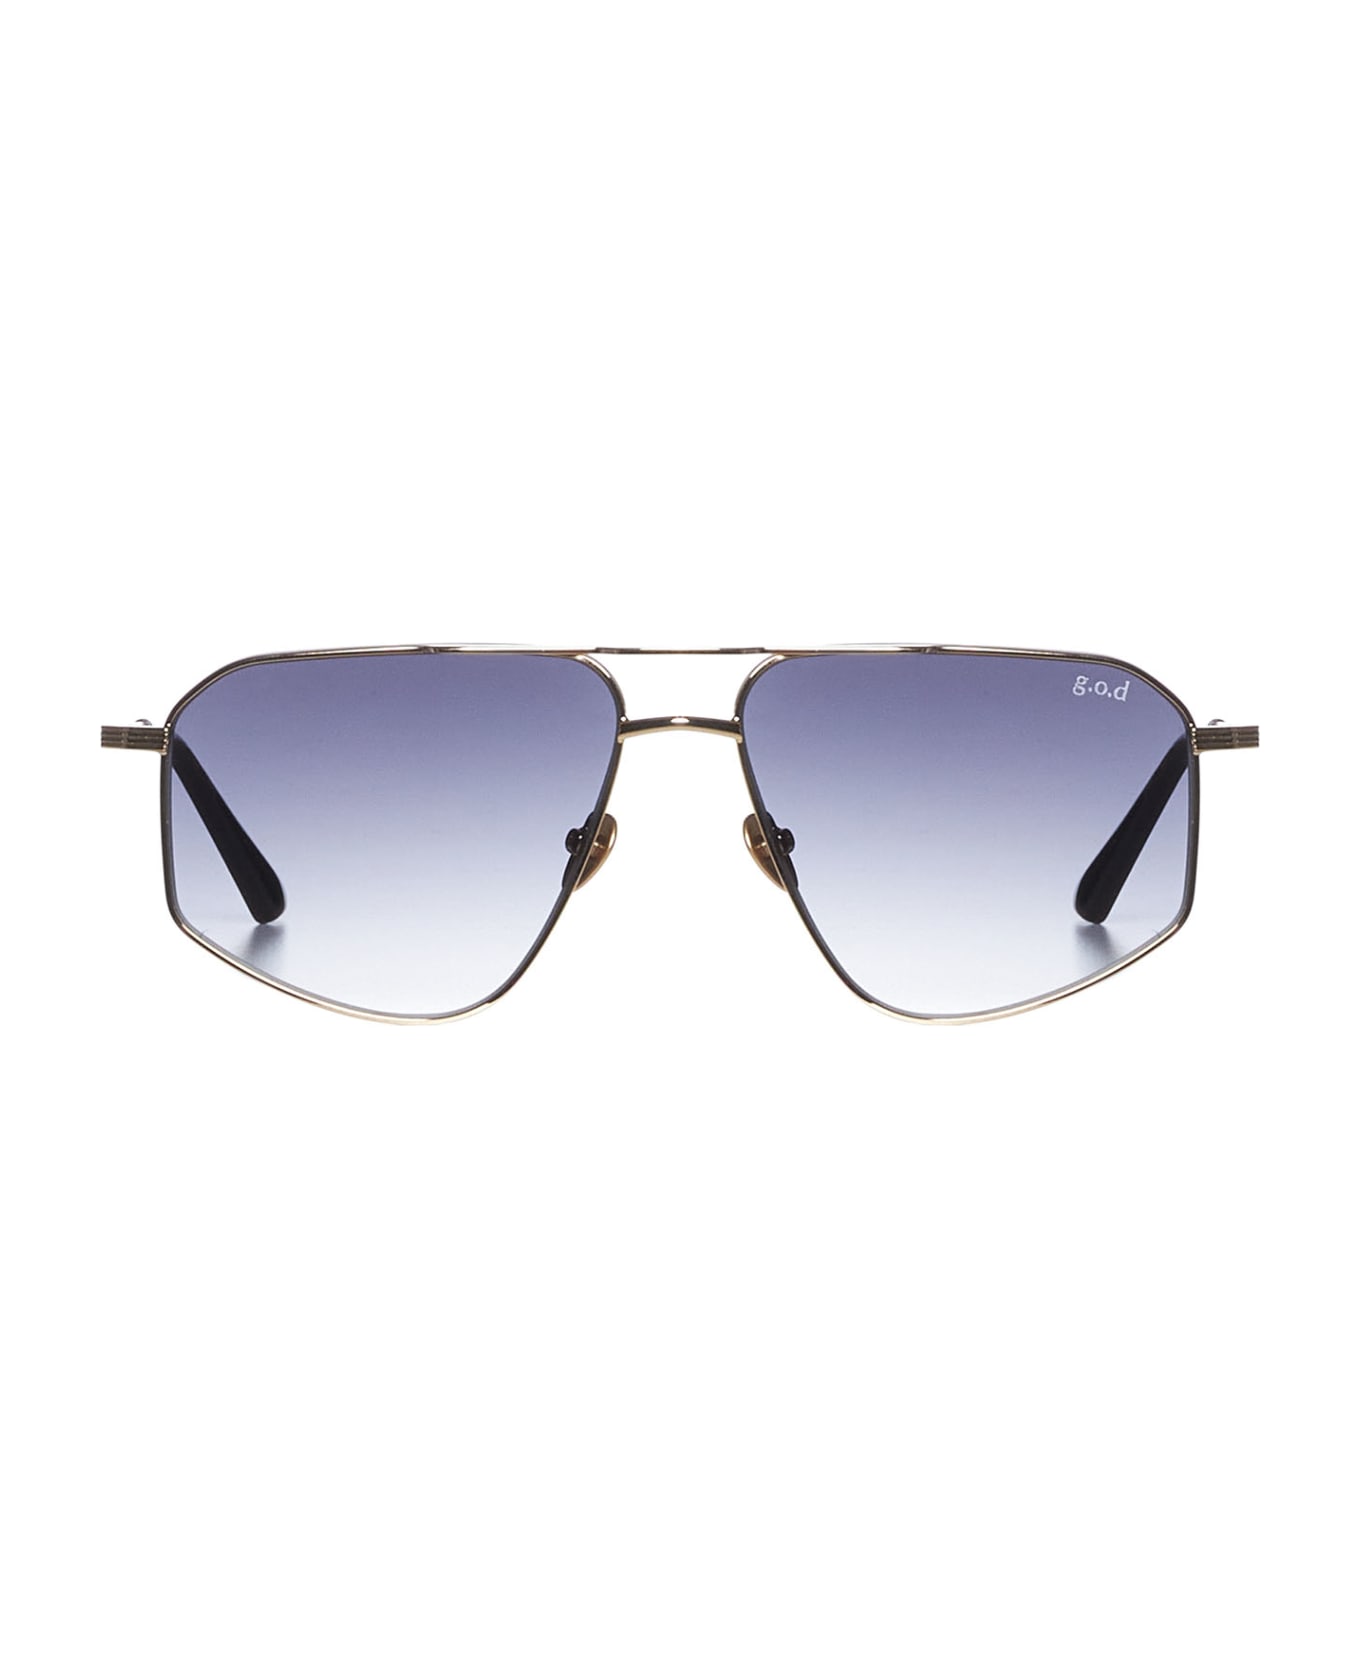 g.o.d Sunglasses - Gold black grey